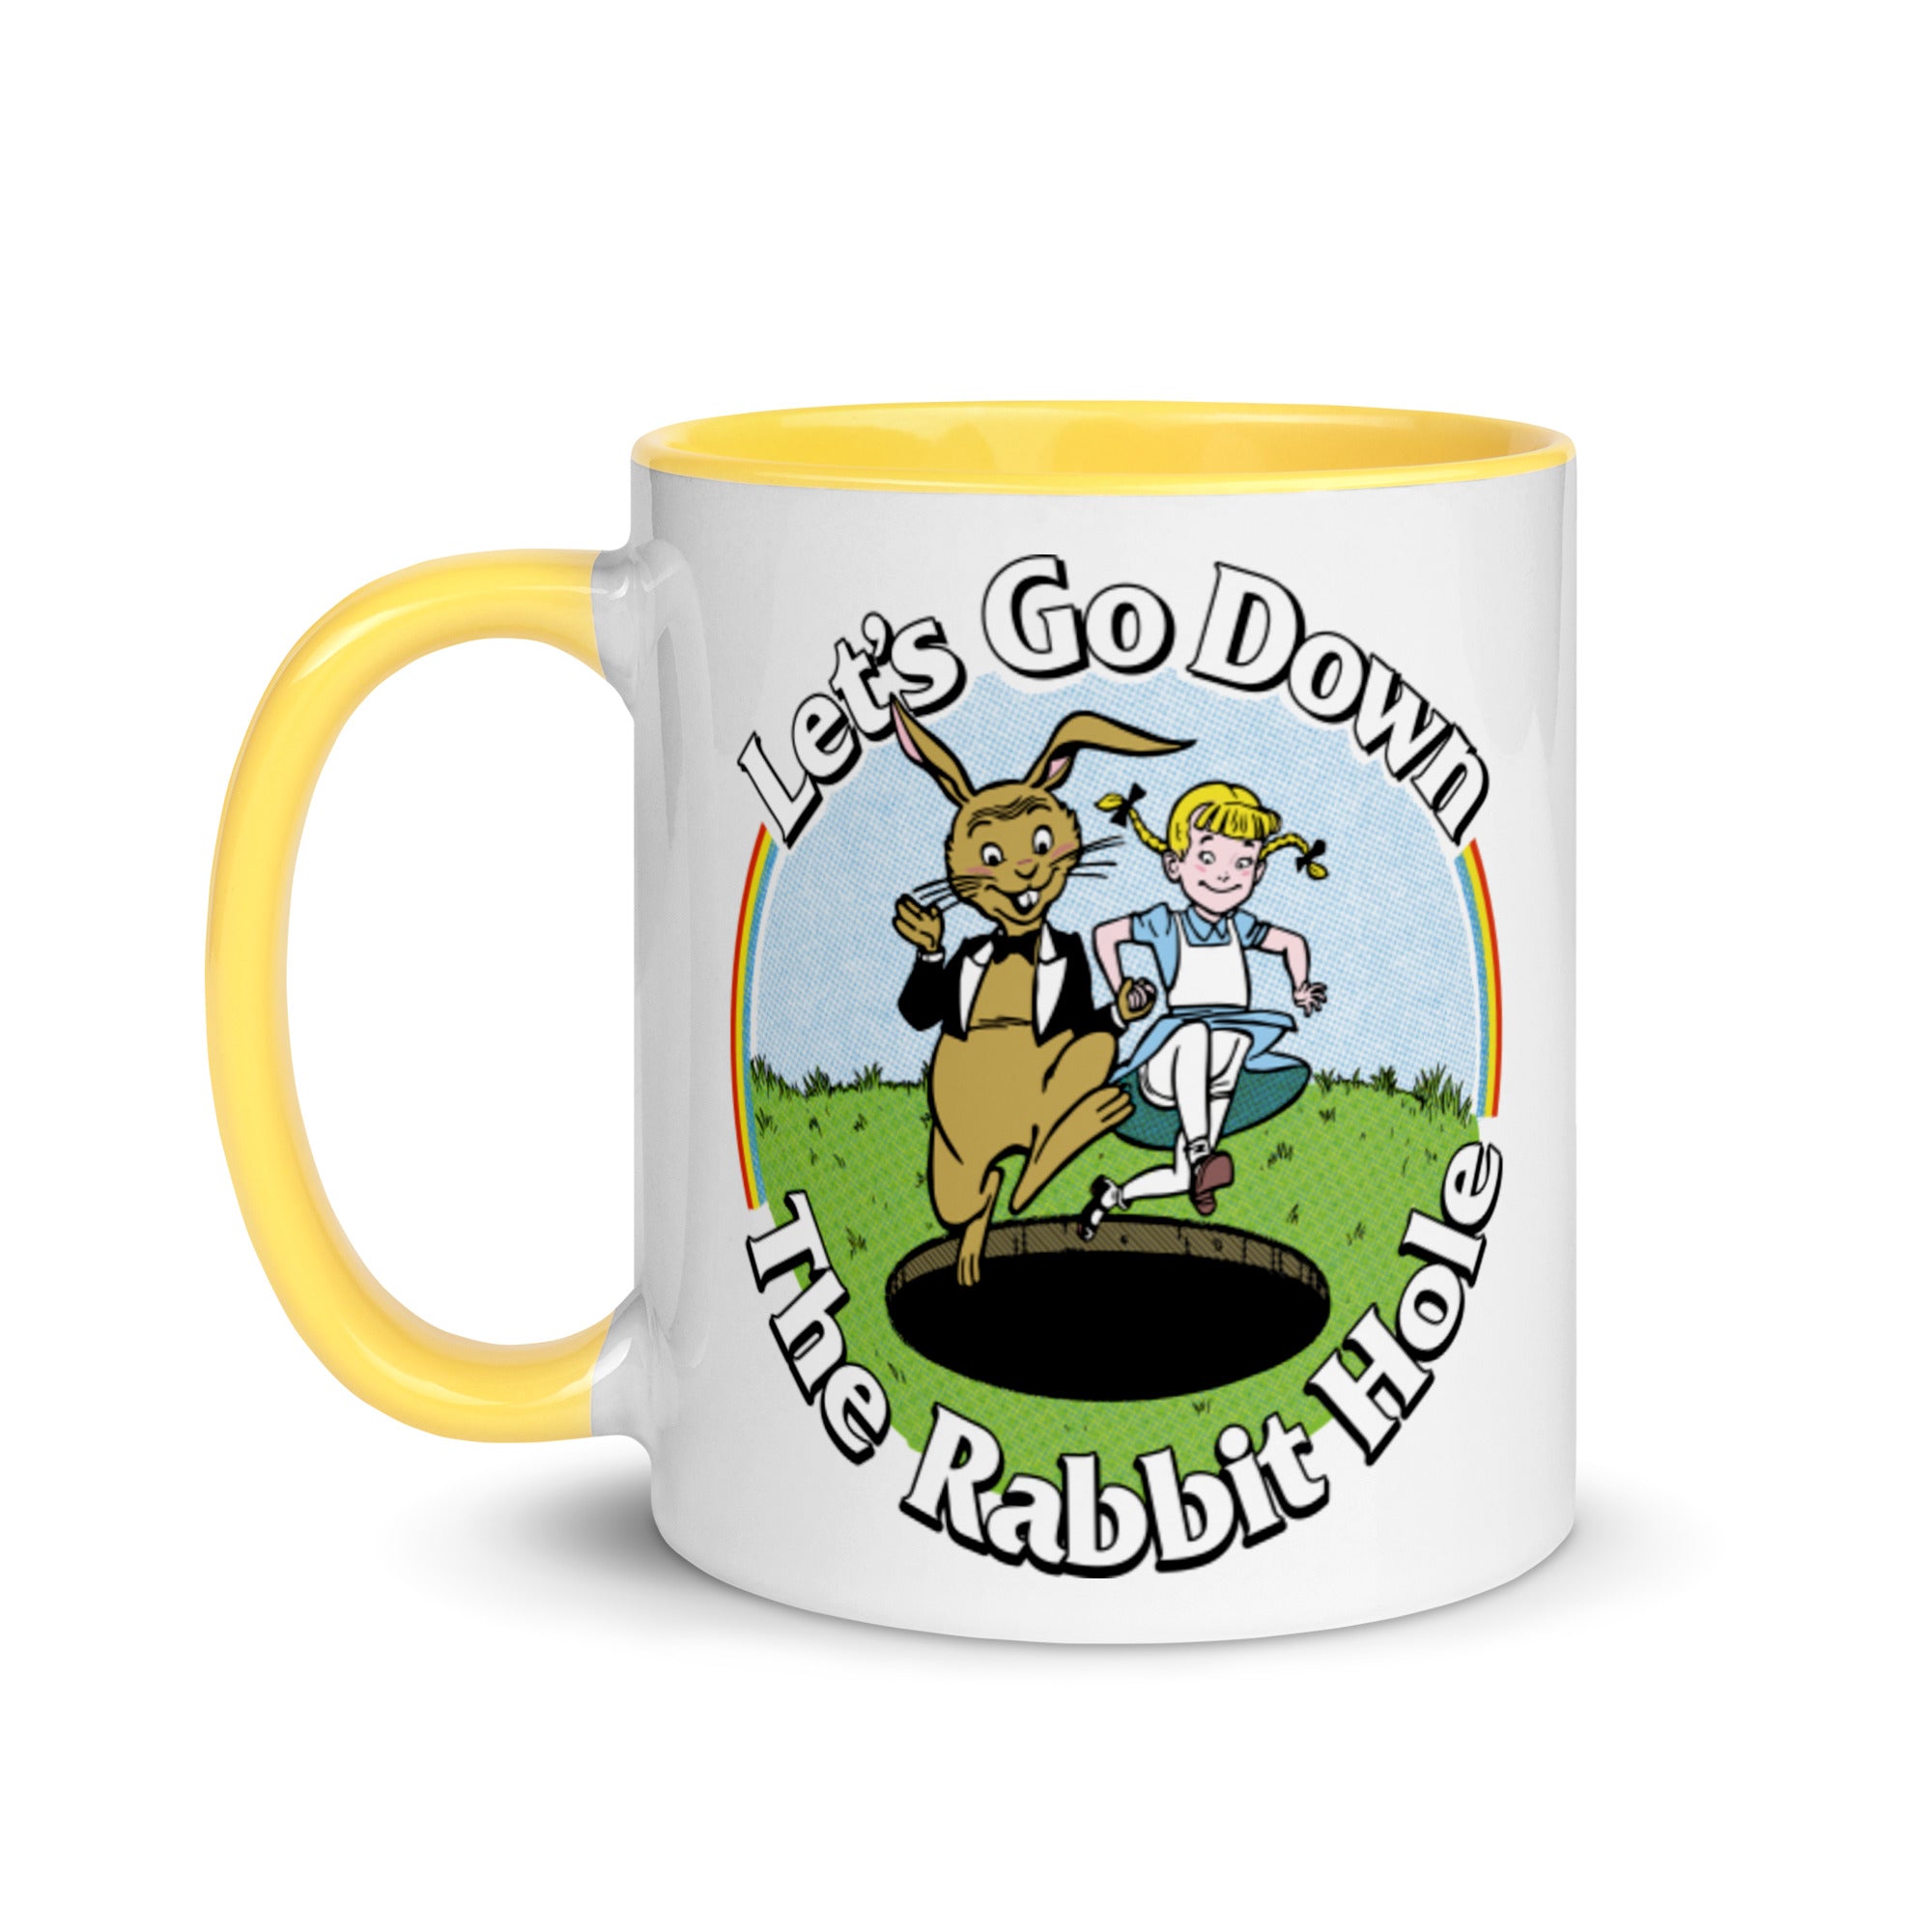 Let's Go Down the Rabbit Hole Coffee Mug